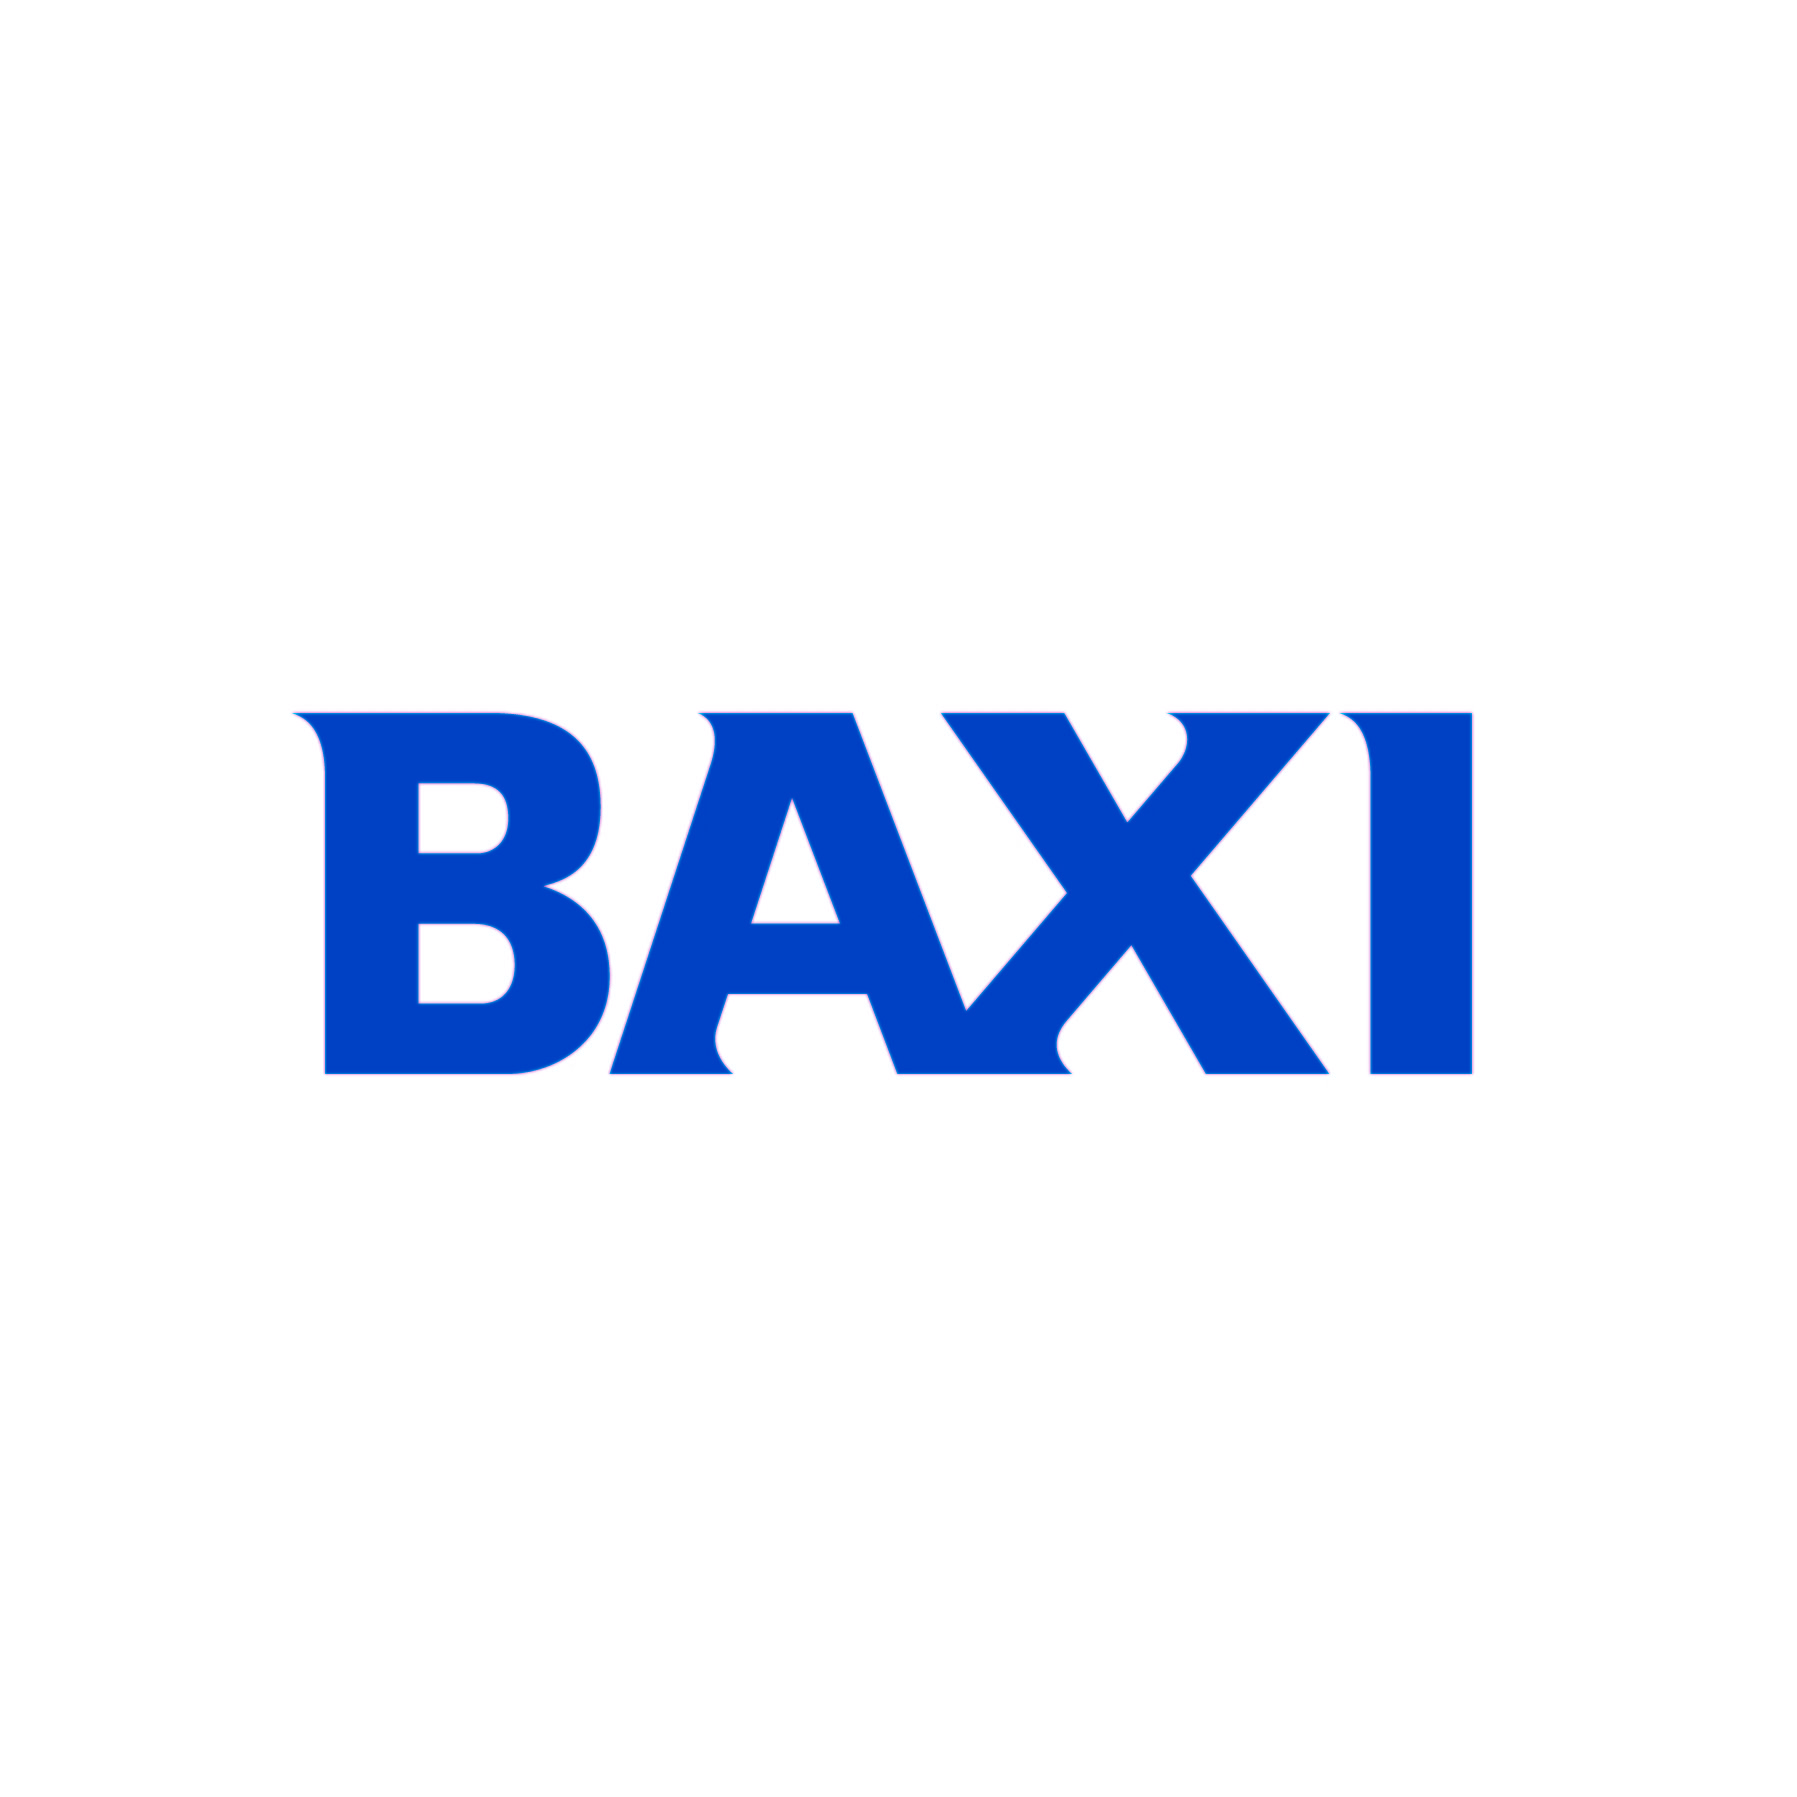 BAXI logo_1